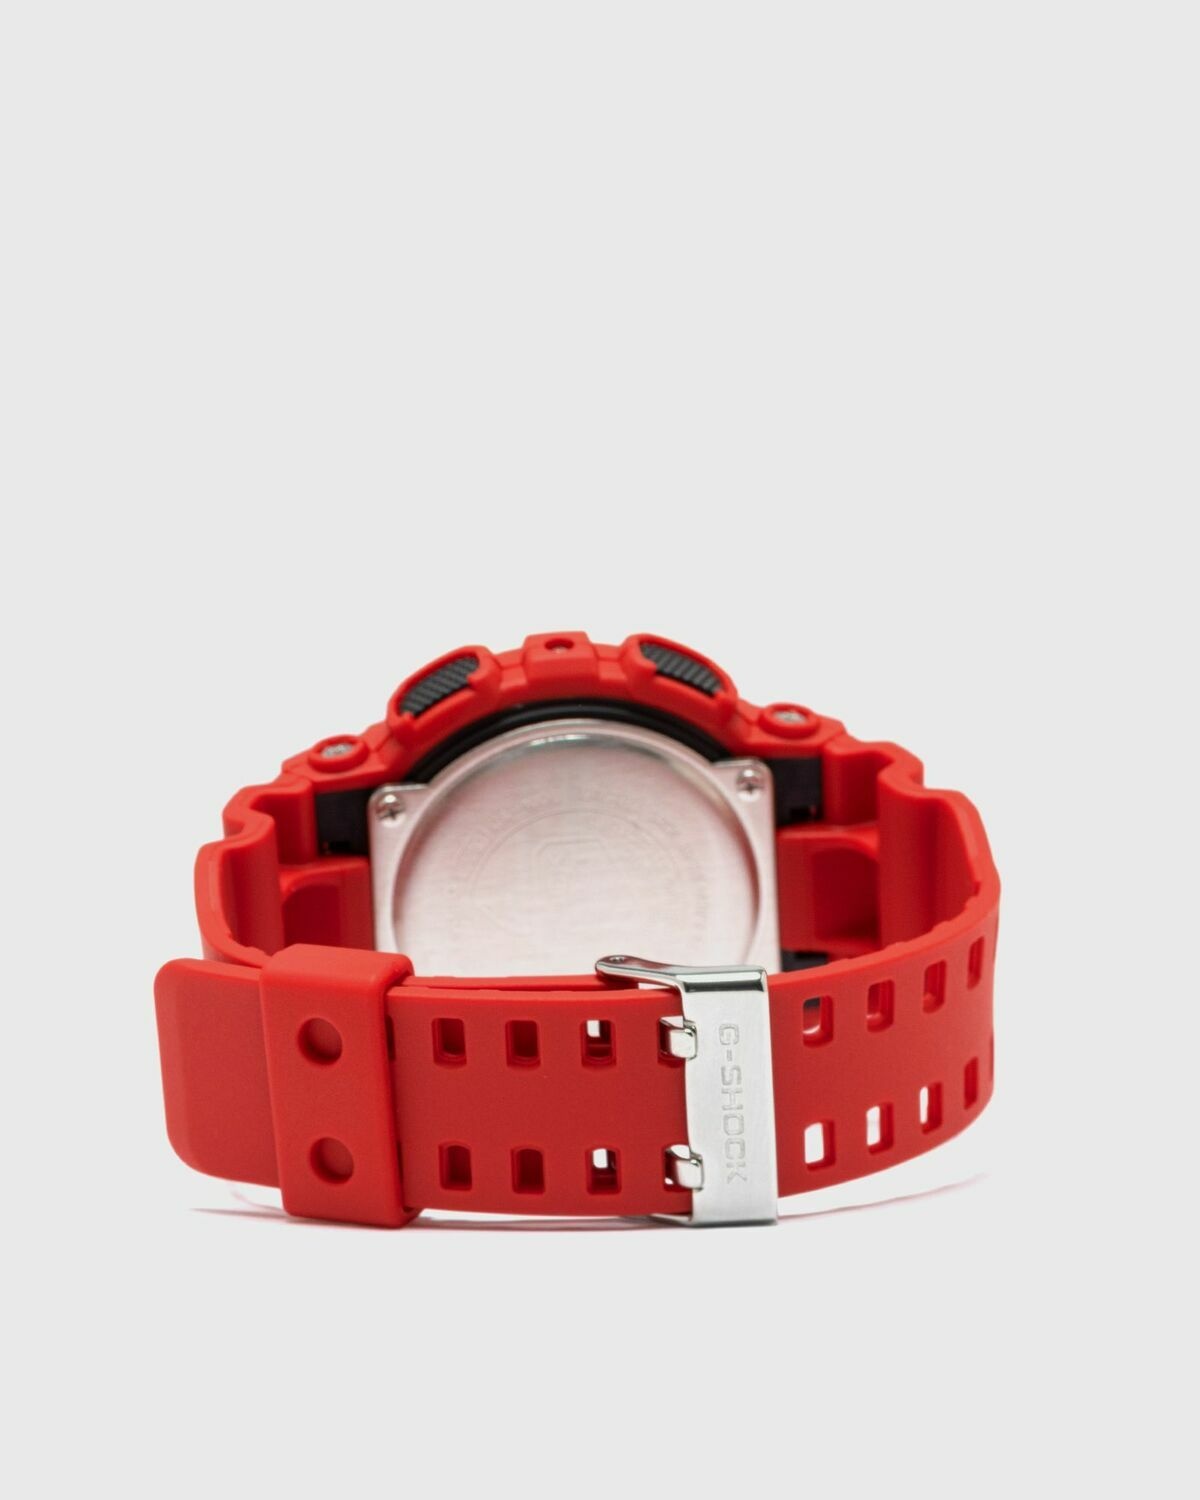 Casio G Shock Ga 100 B 4 Aer Red - Mens - Watches Casio